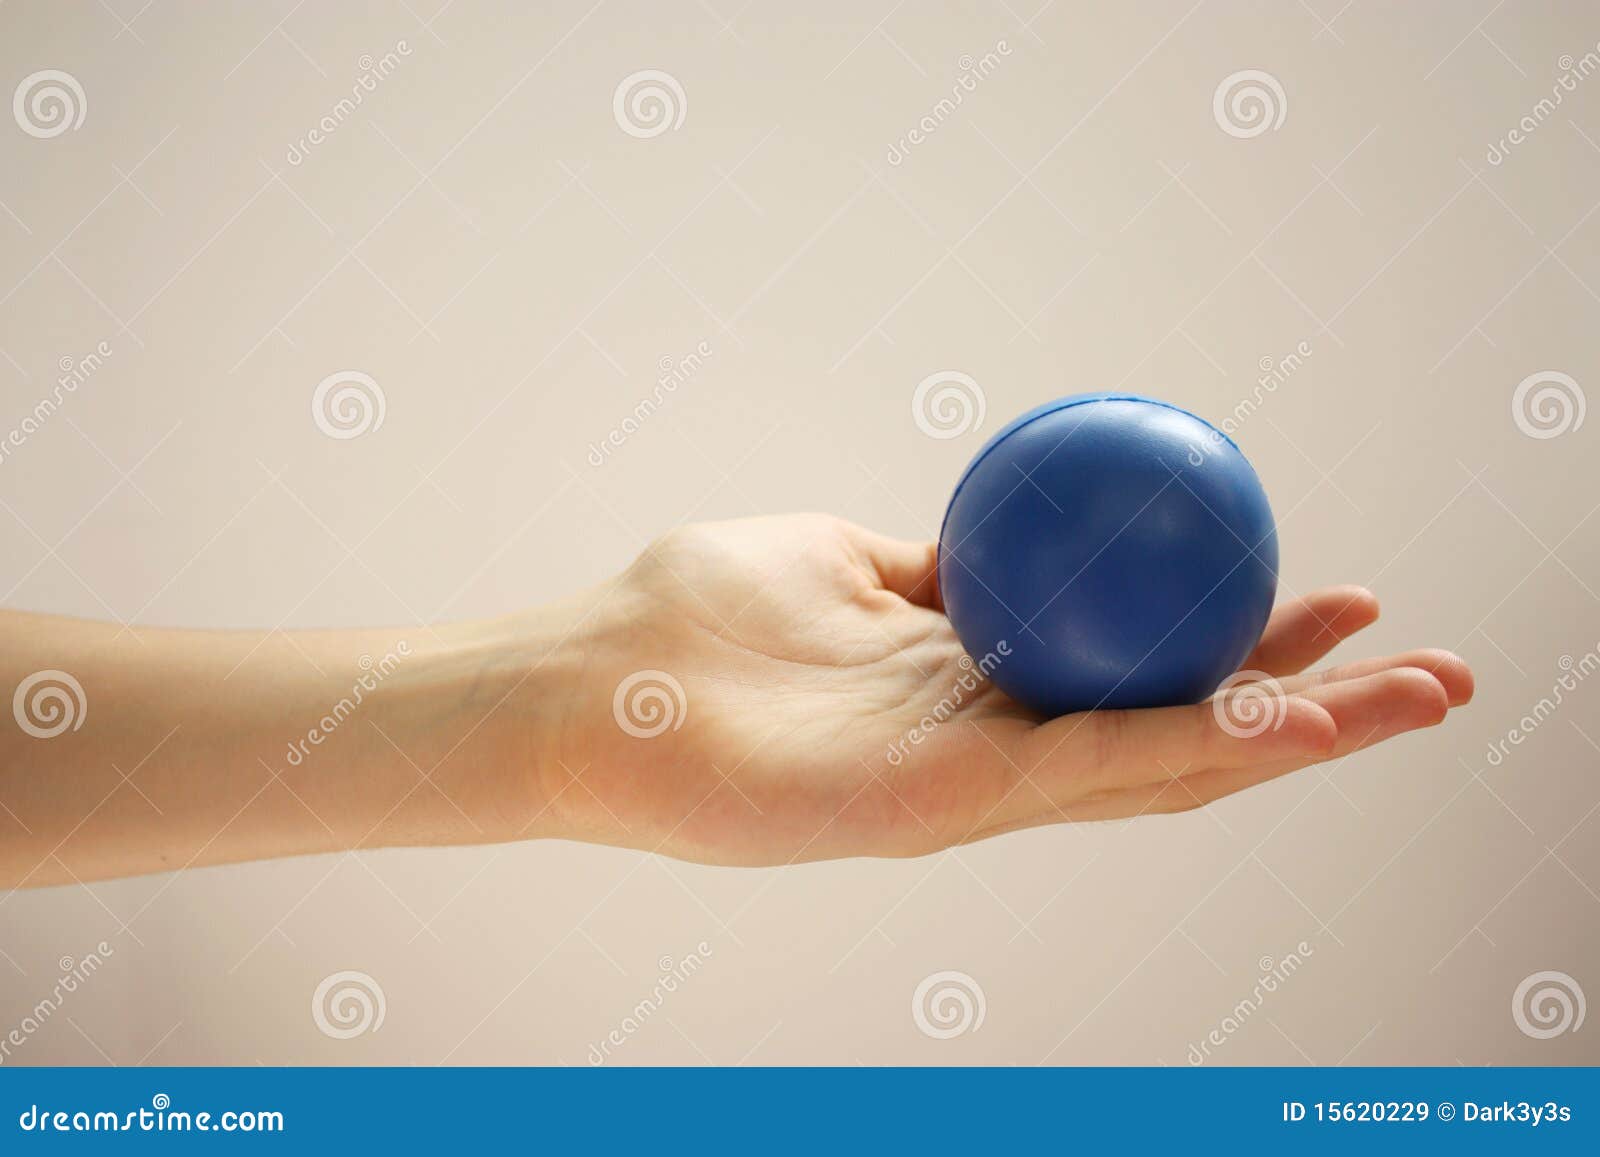 Шар с руками и ногами. В руке электро шар. Мужская рука с шариком.